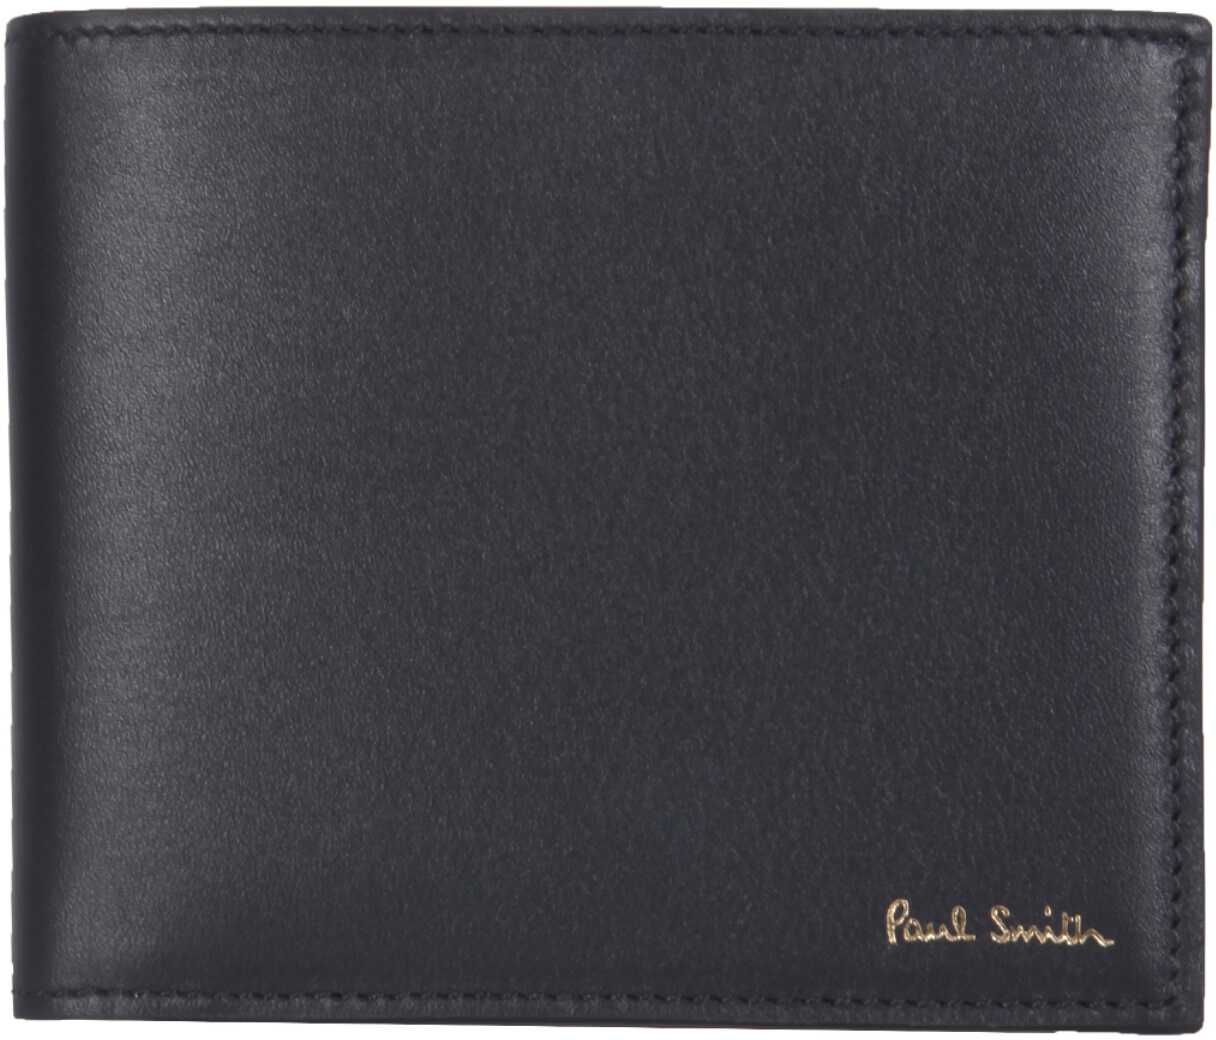 Paul Smith Bifold Wallet BLACK